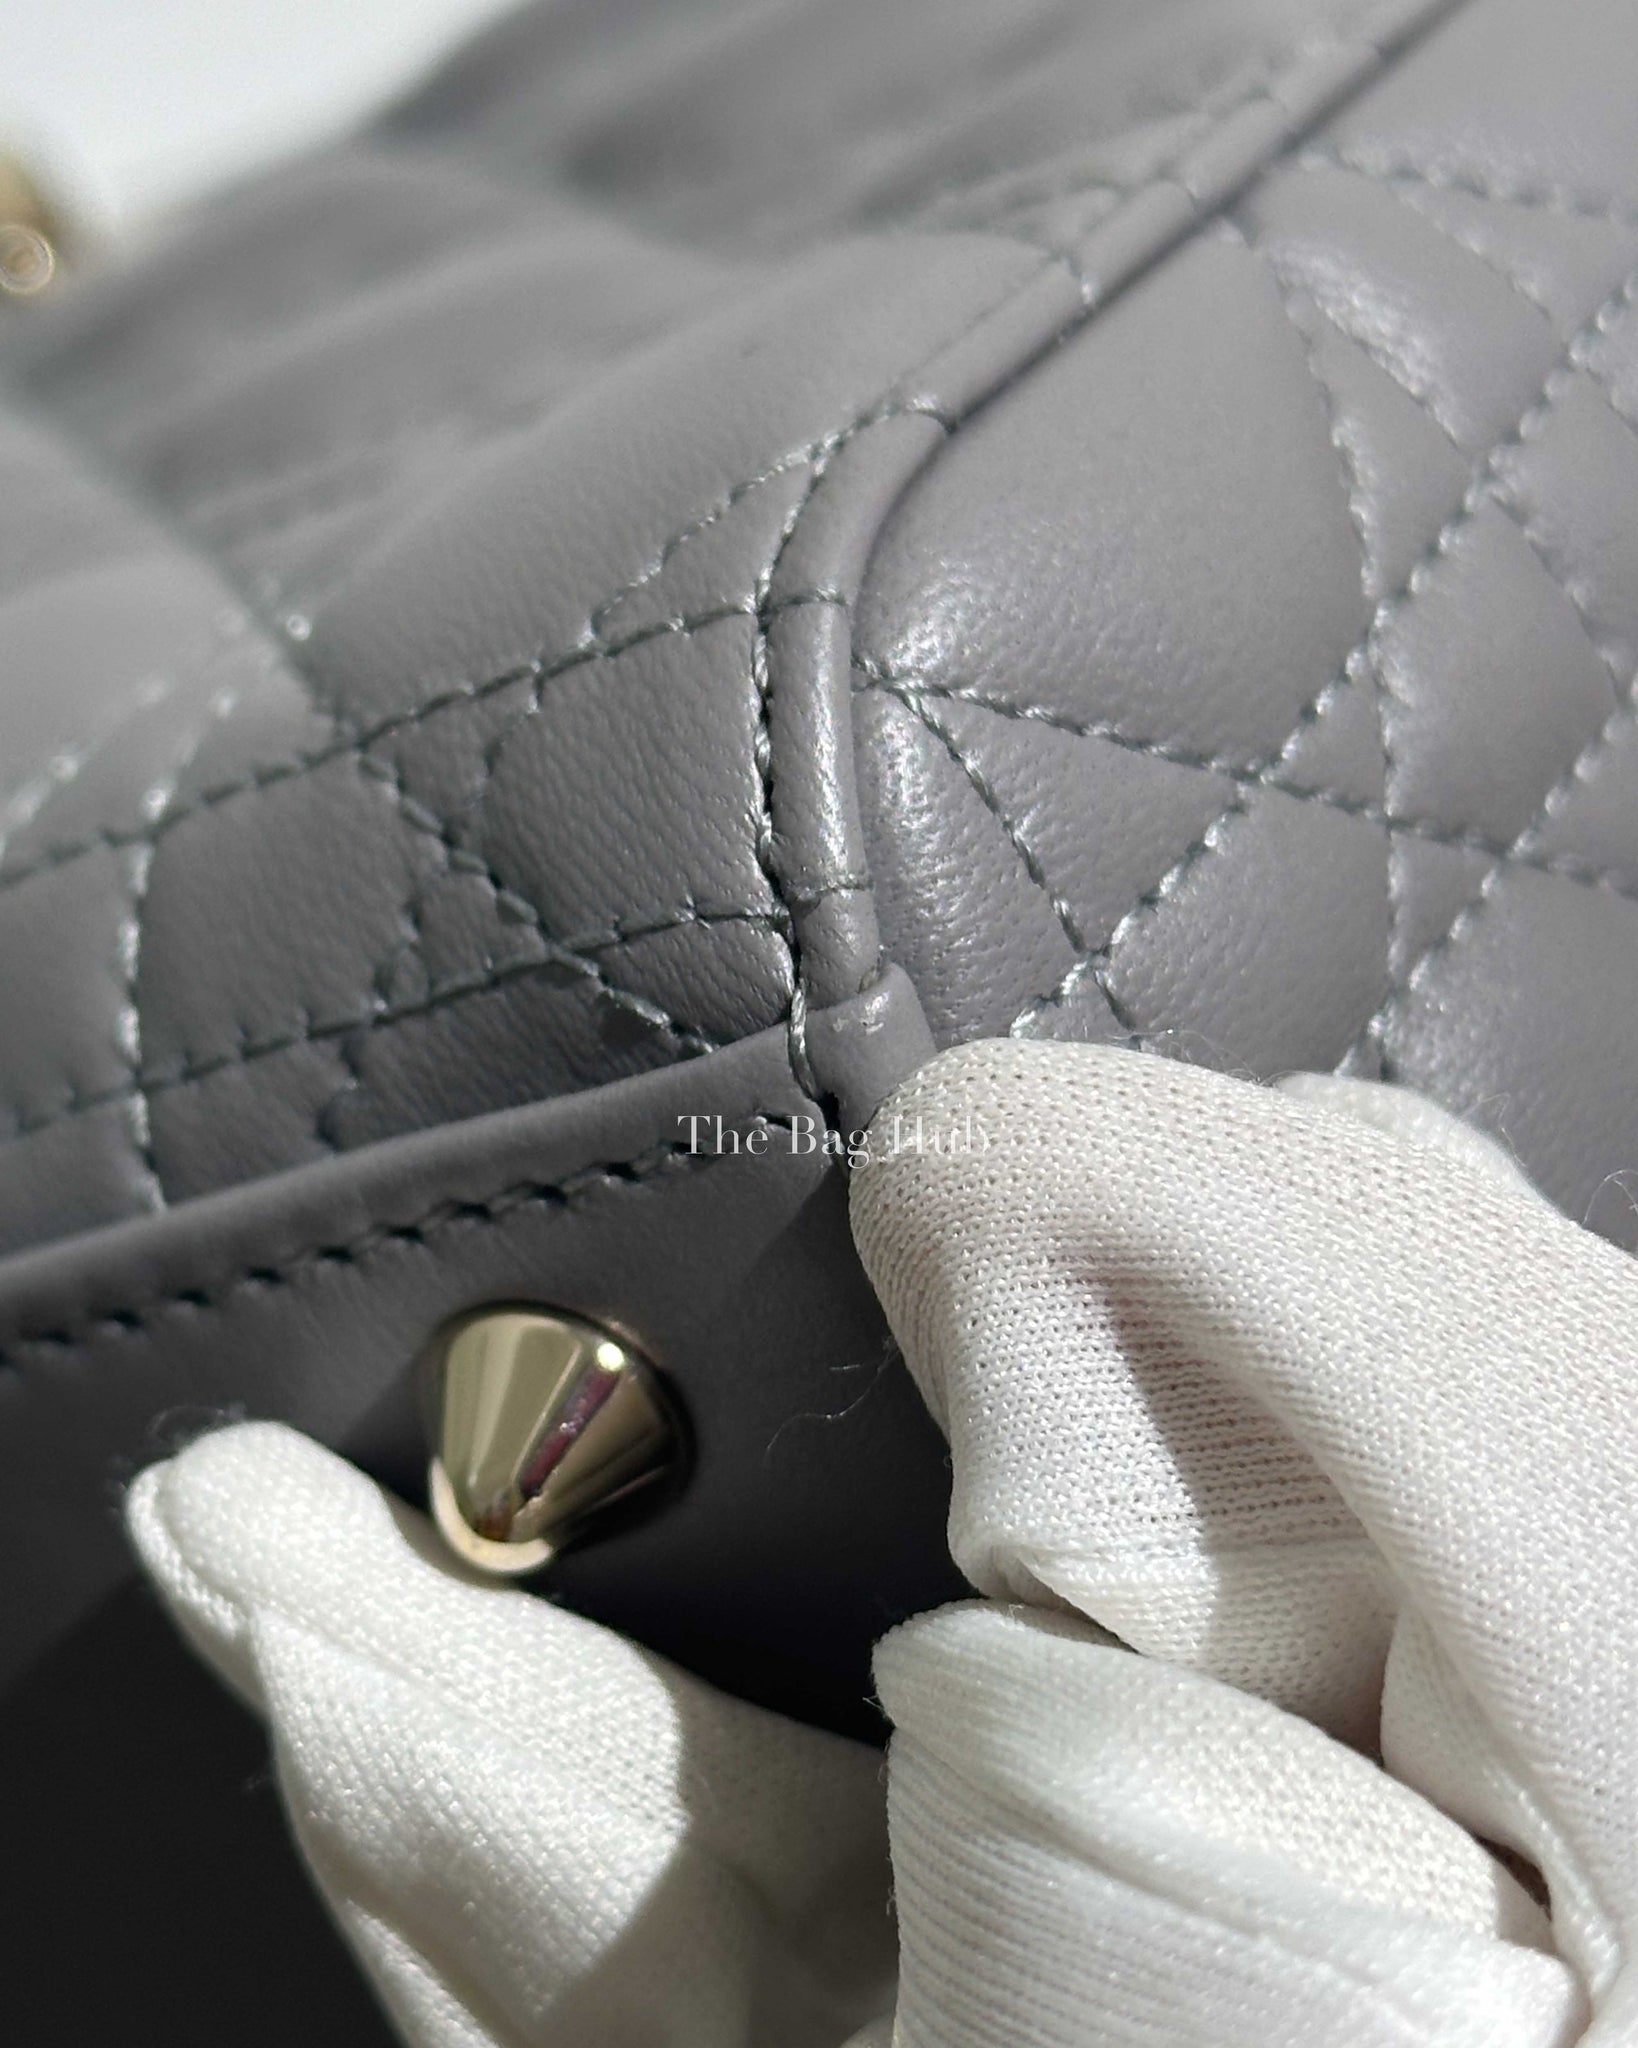 Dior Gray Leather Cannage Small ABCDior Lady Dior Bag